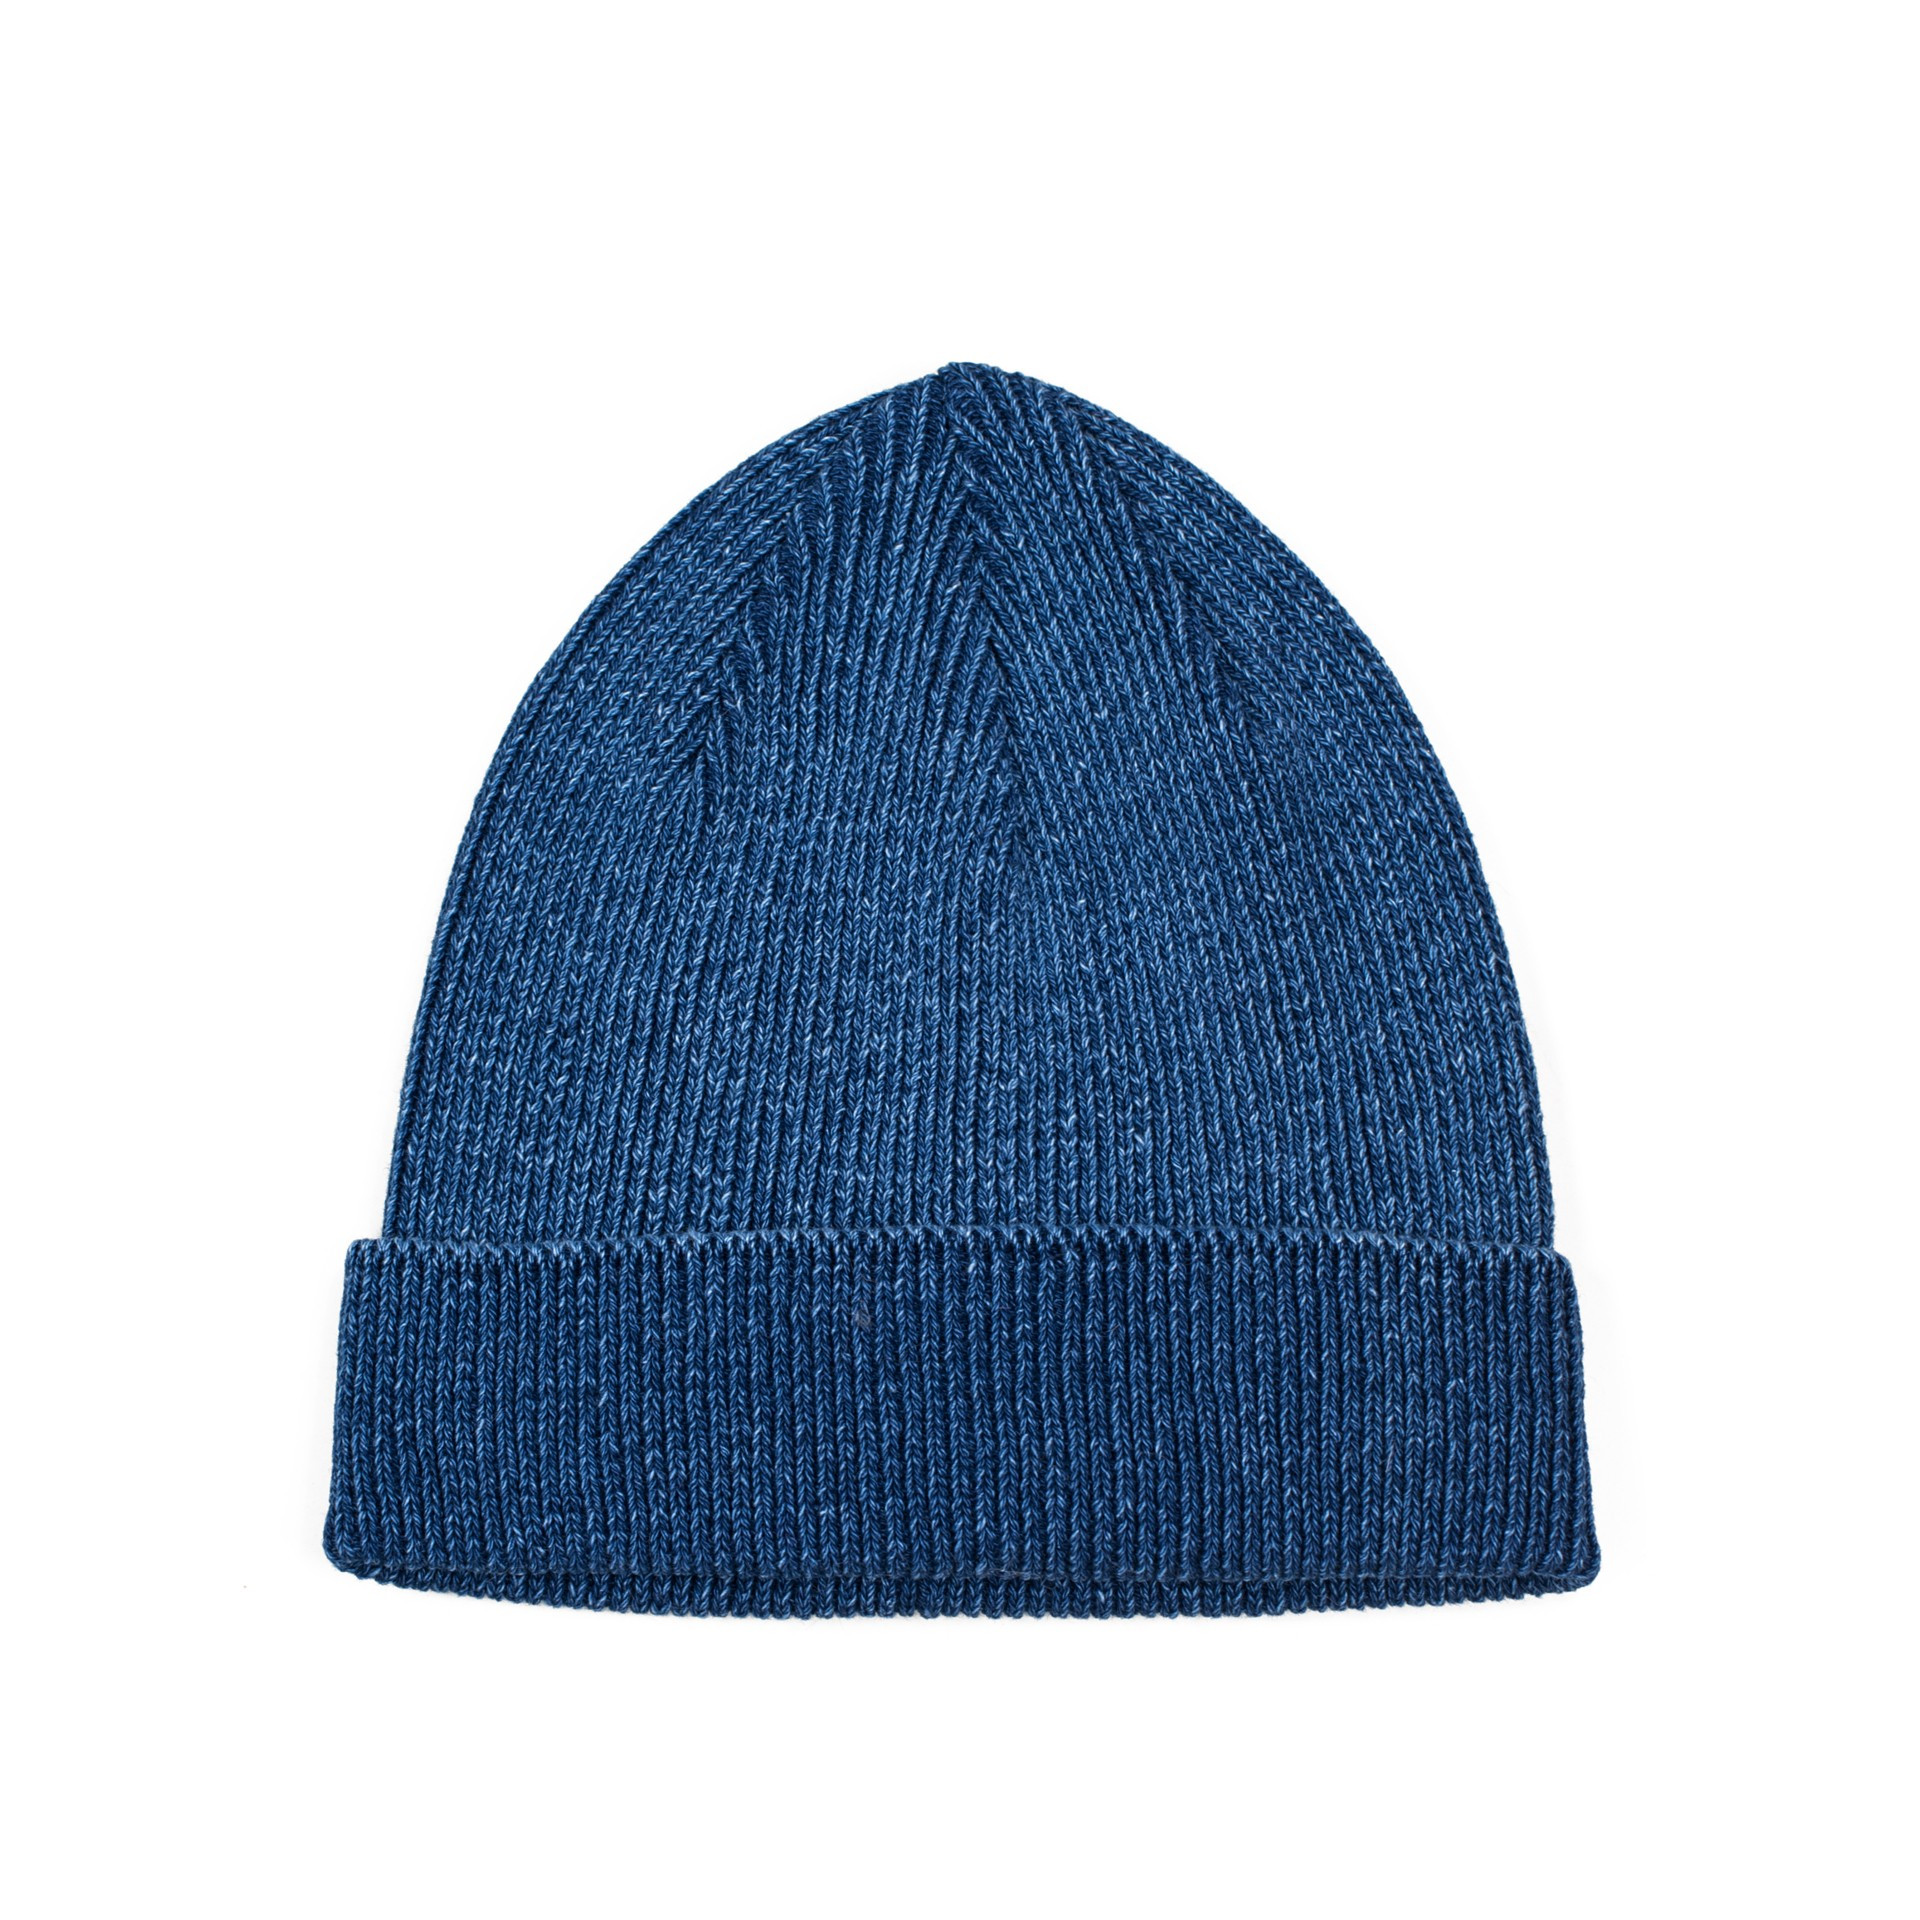 Čepice Hat model 16596612 Blue - Art of polo Velikost: UNI